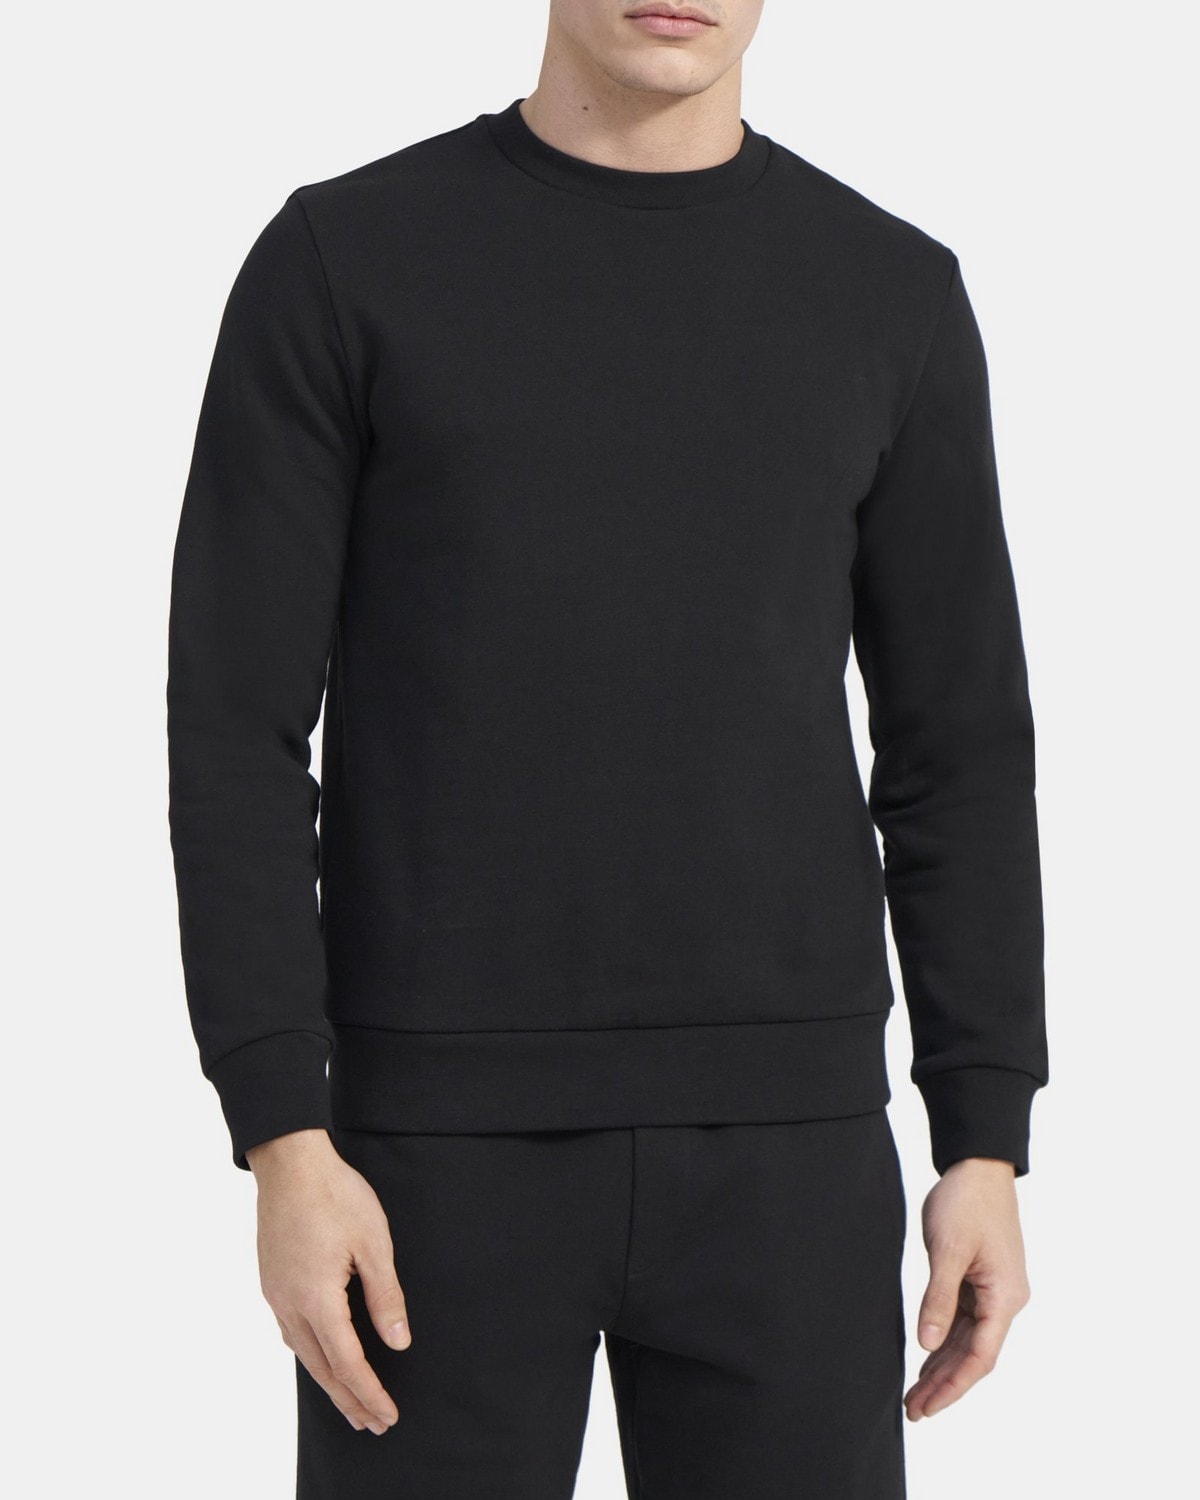 Essential Sweatshirt in Cotton Terry